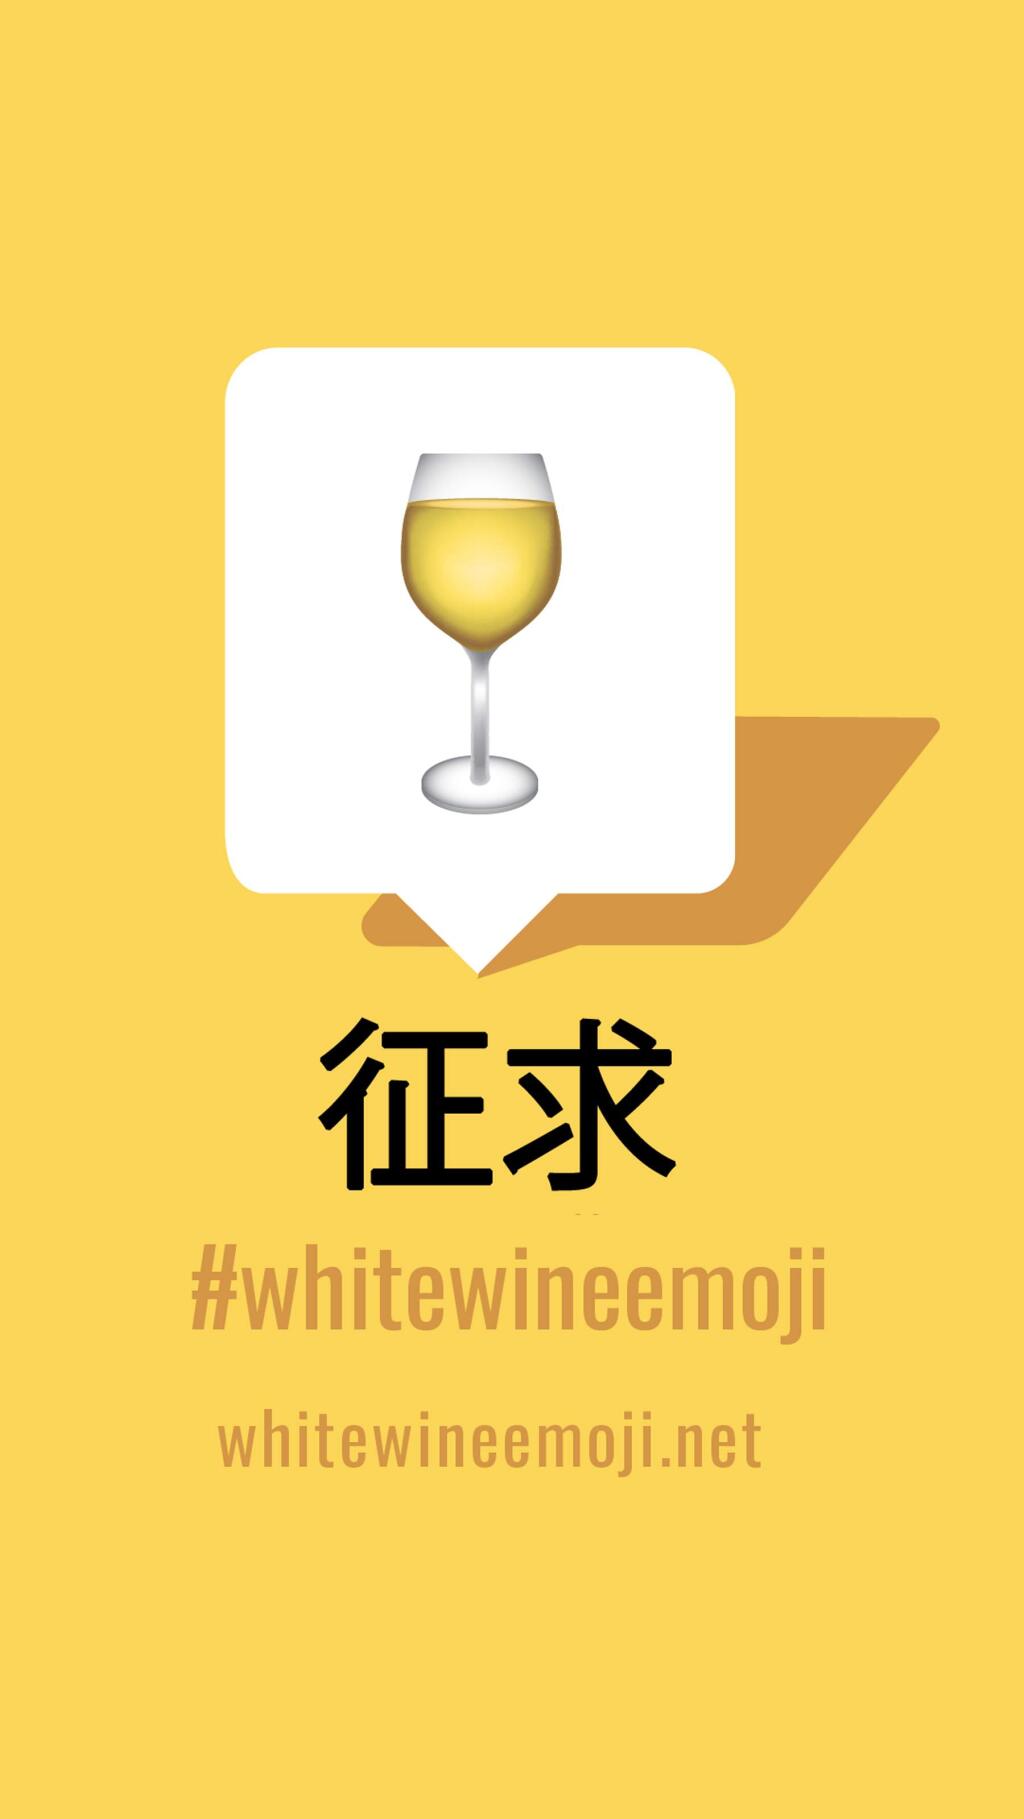 Kendall Jackson thinks its time for white wine emoji